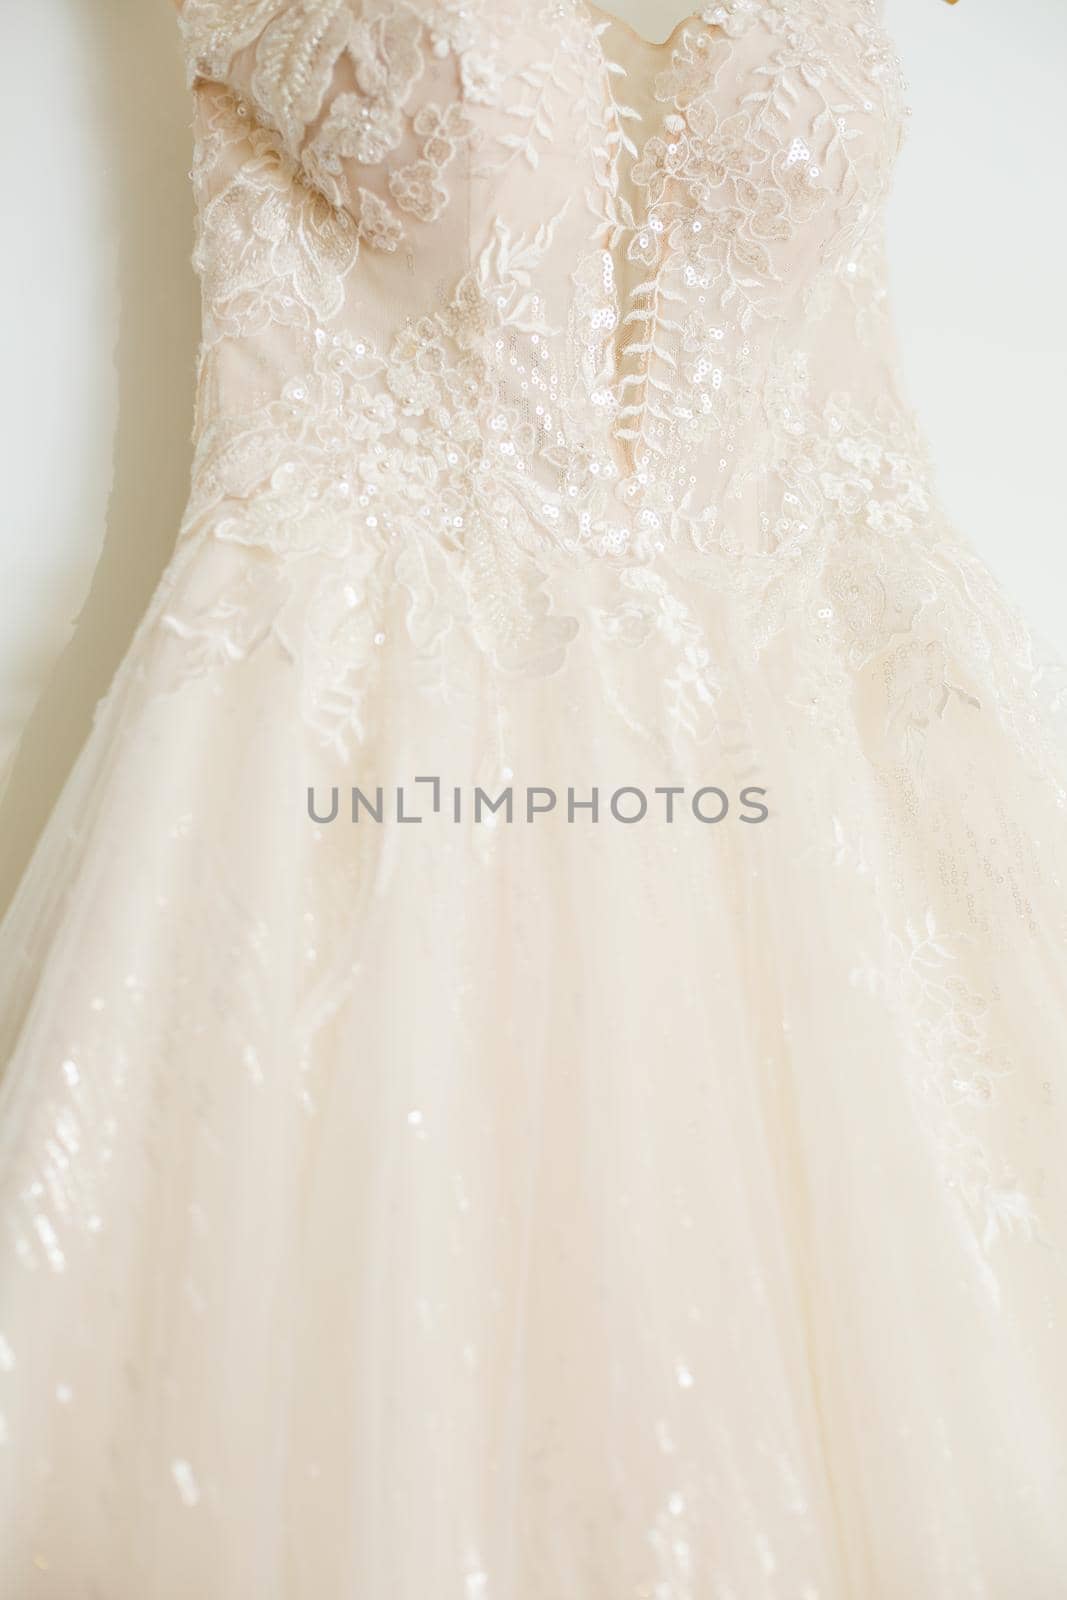 Beautiful wedding dress for the bride on the wedding day by Dmitrytph